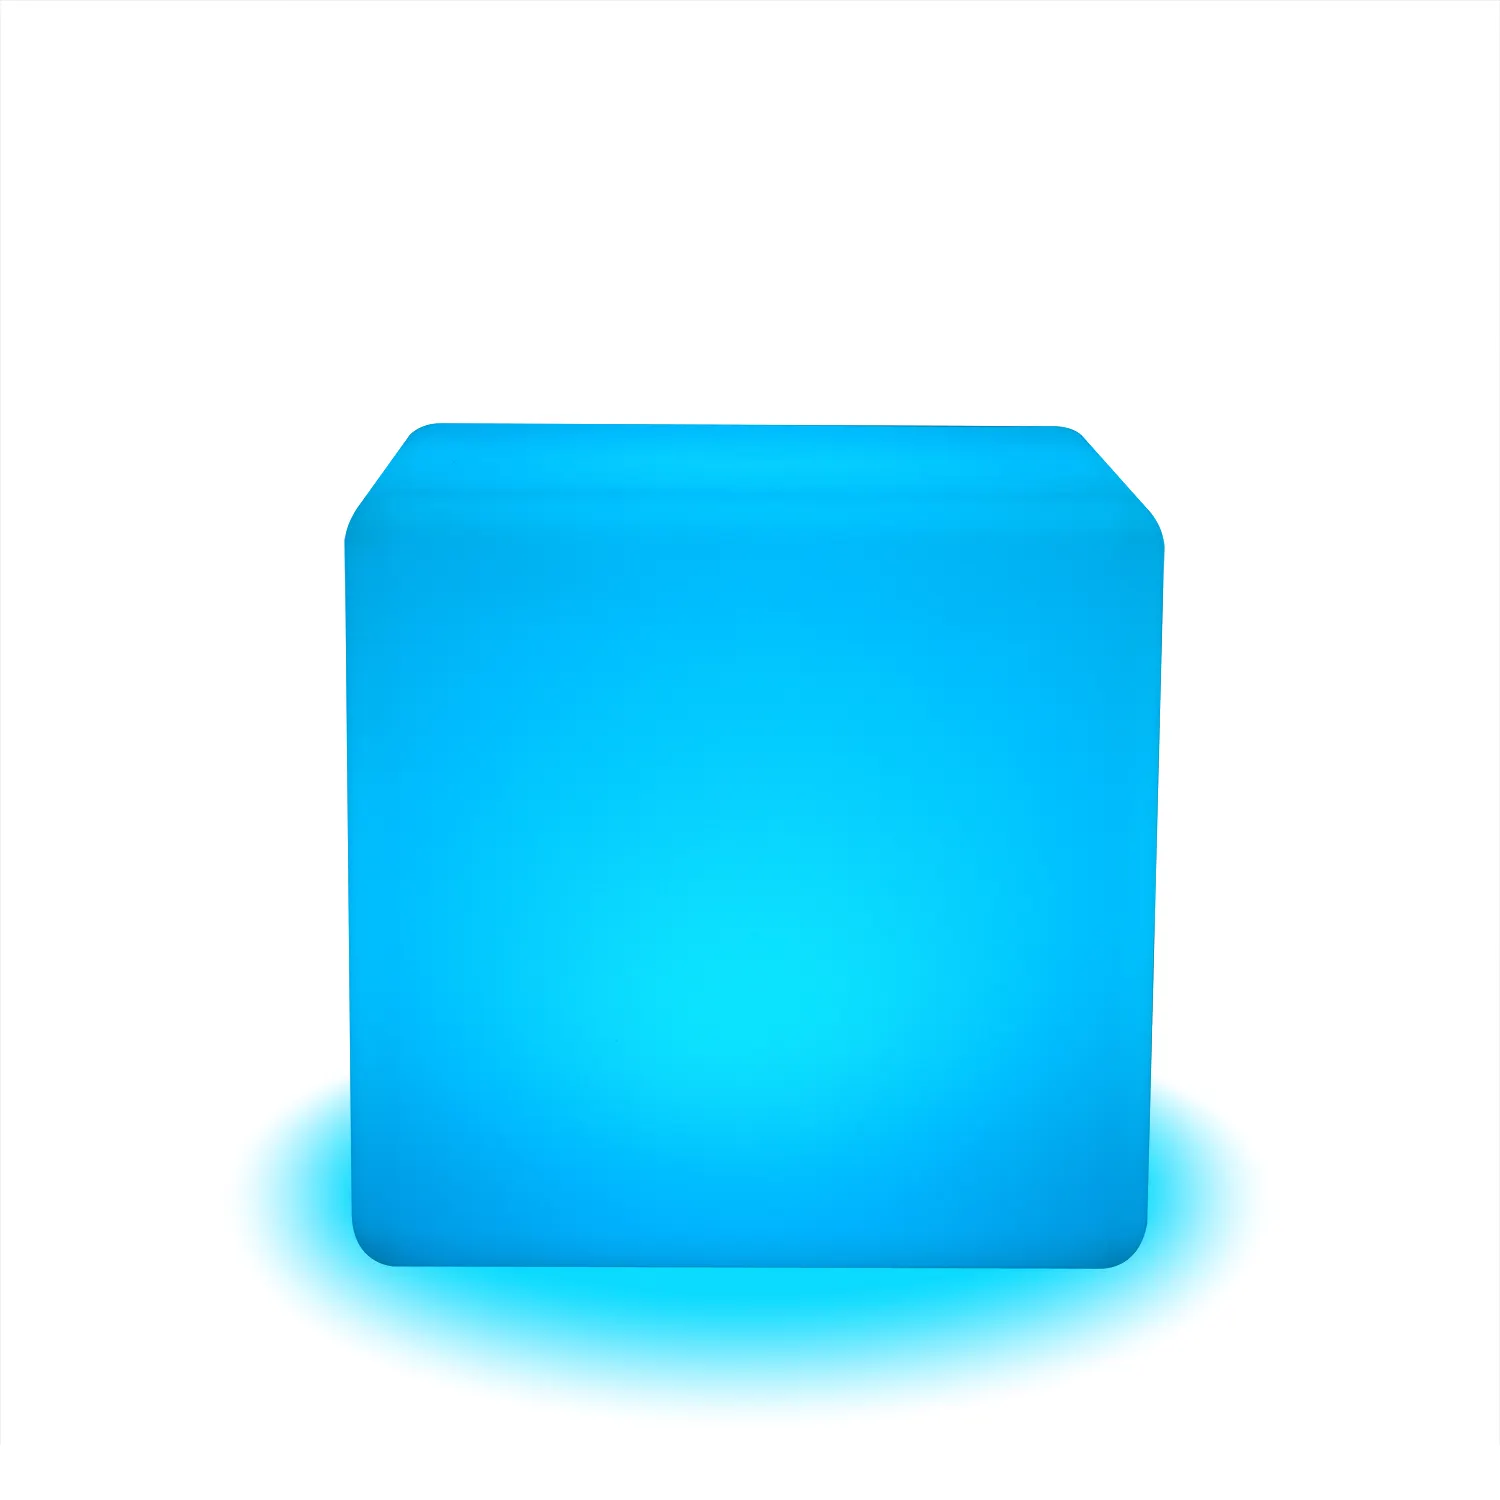 RGBW LED cube chair /LED cube bar table /LED cube bar seat